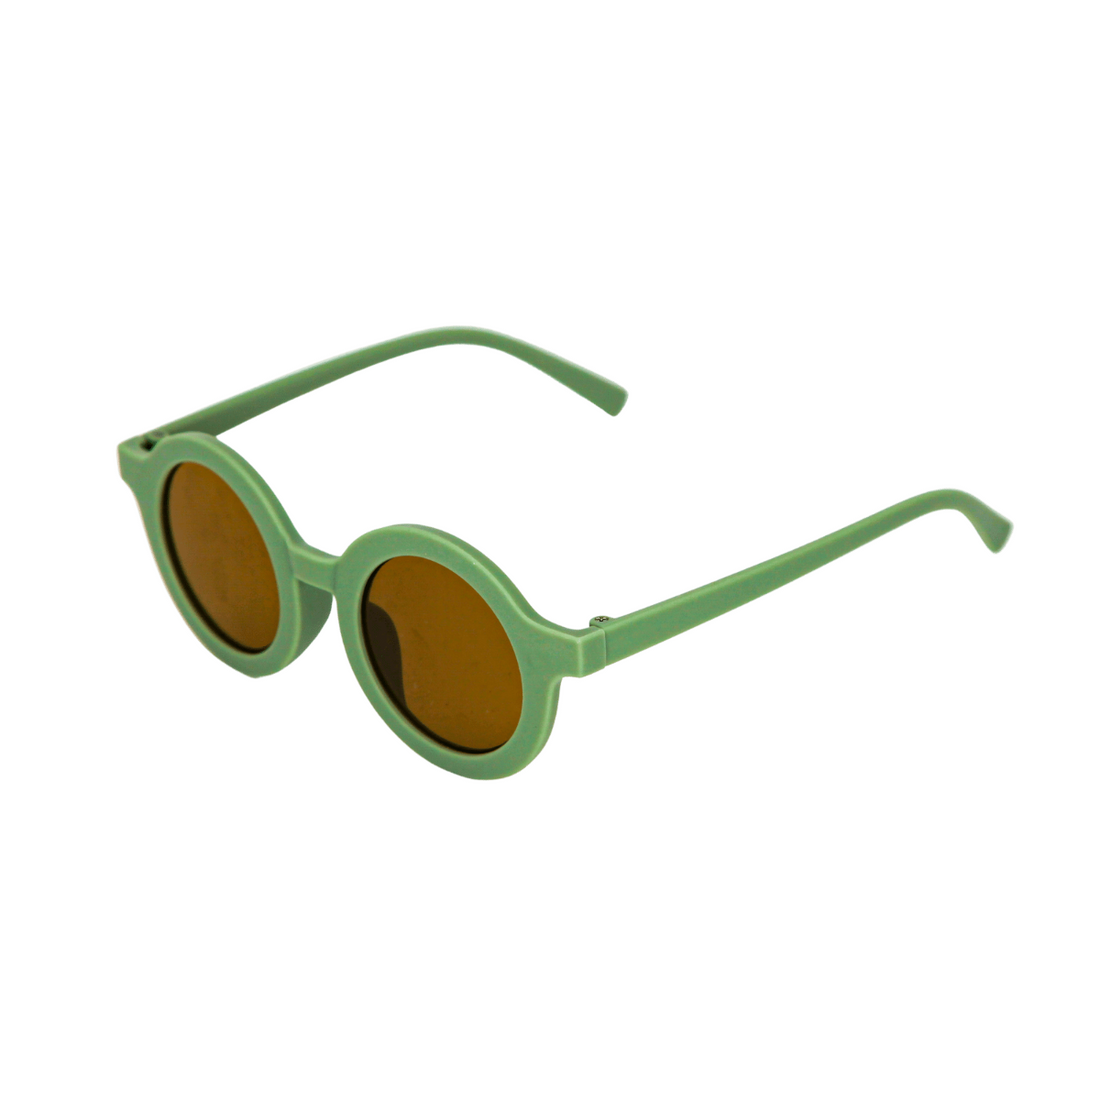 Jetsetters Sunglasses - Unisex - Green (3-6 Years)